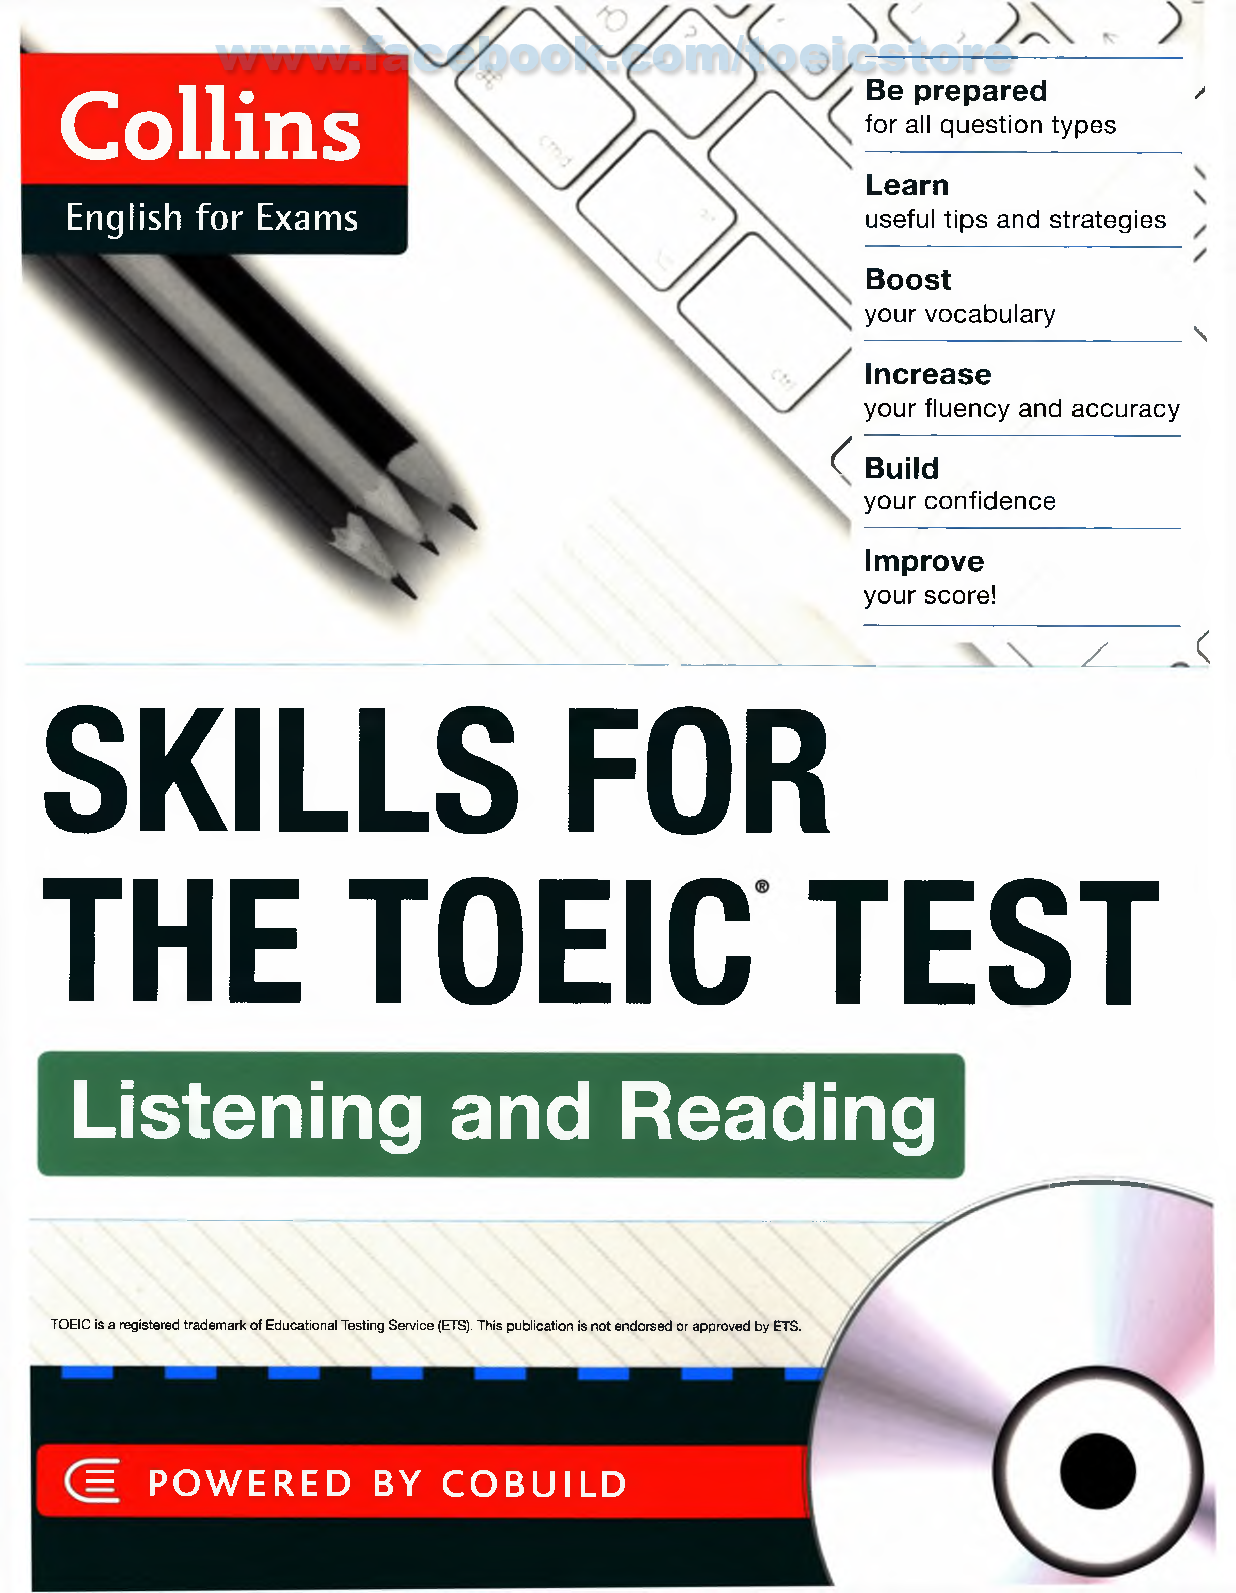 Sách Collins Skill for the TOEIC test Reading Listening | Xem online, tải PDF miễn phí (trang 1)